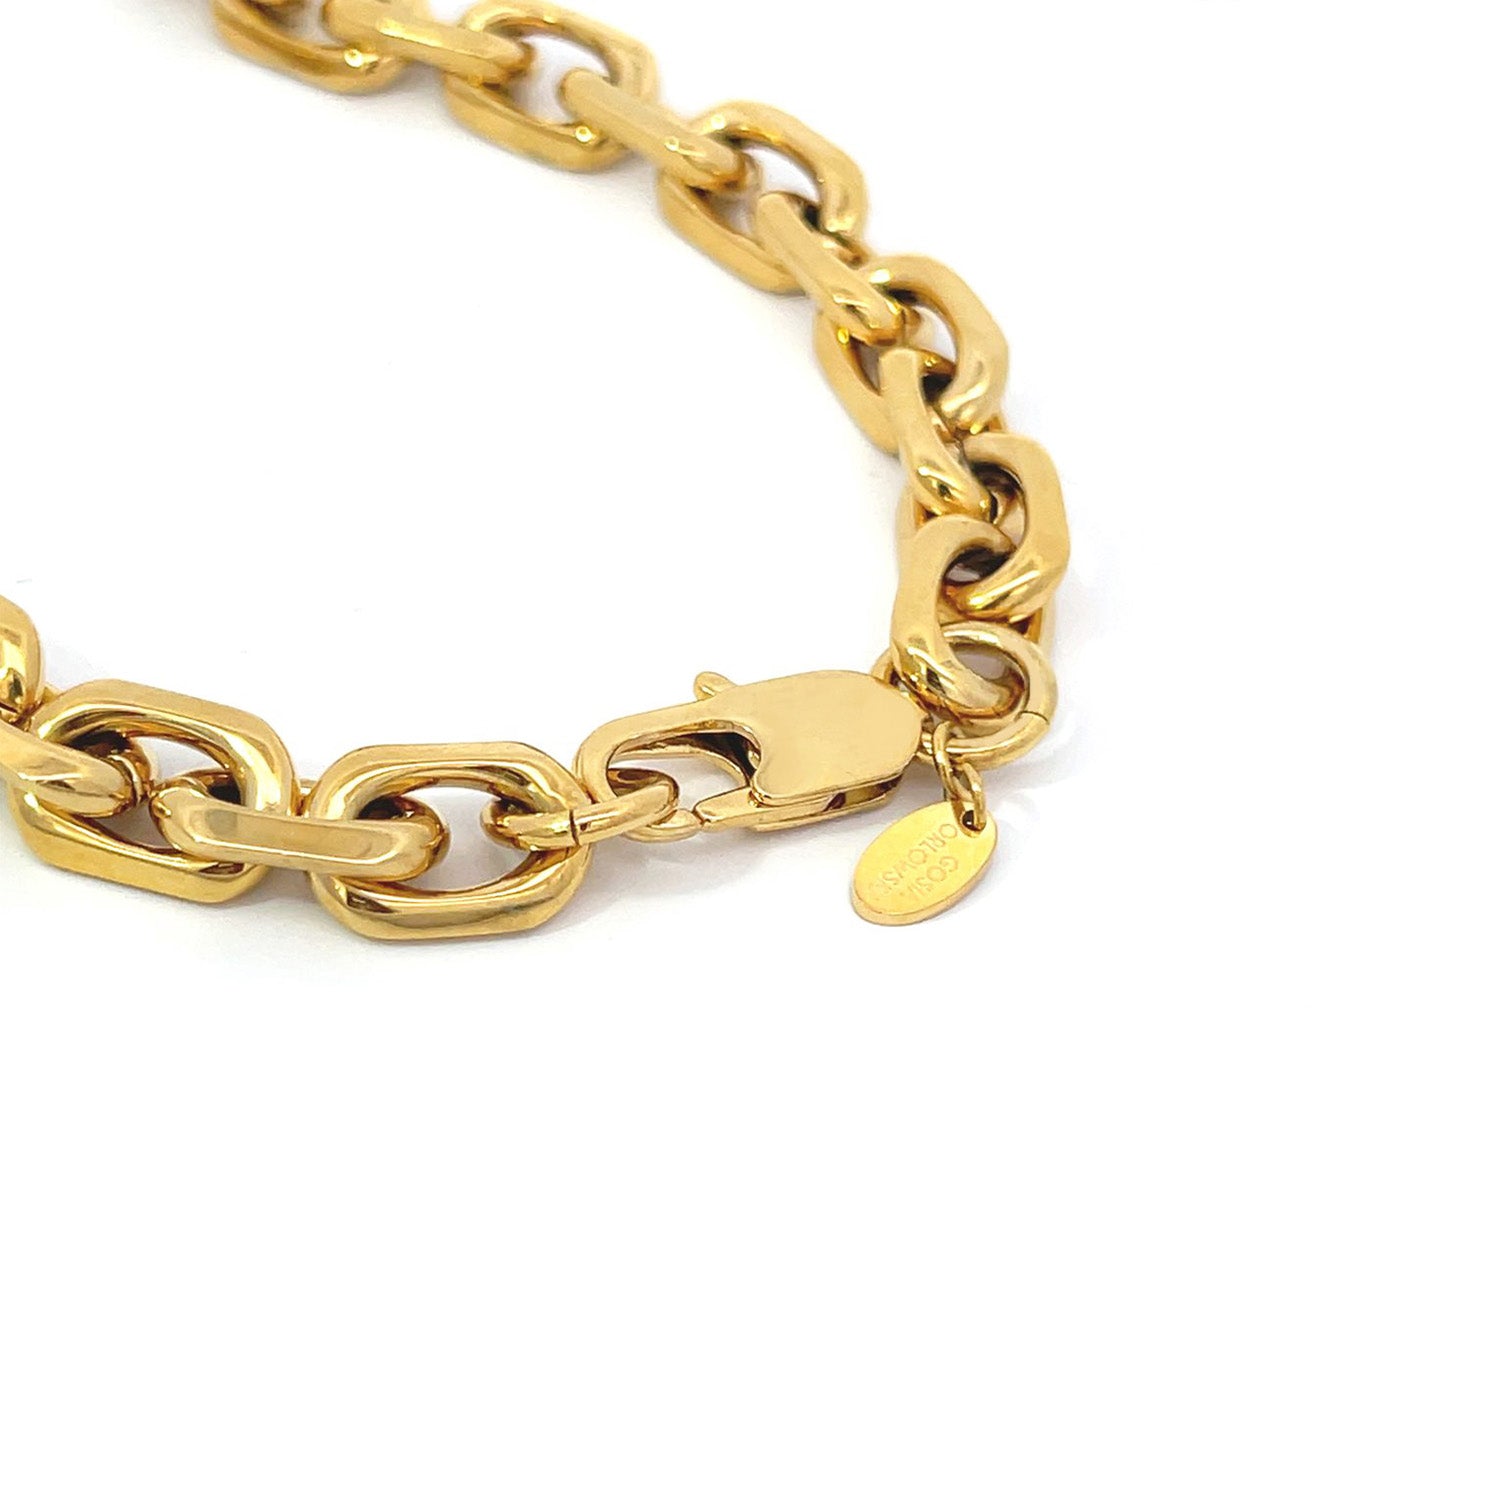 SHAYE Trace Chain Necklace: A Gosia Orlowska Creation